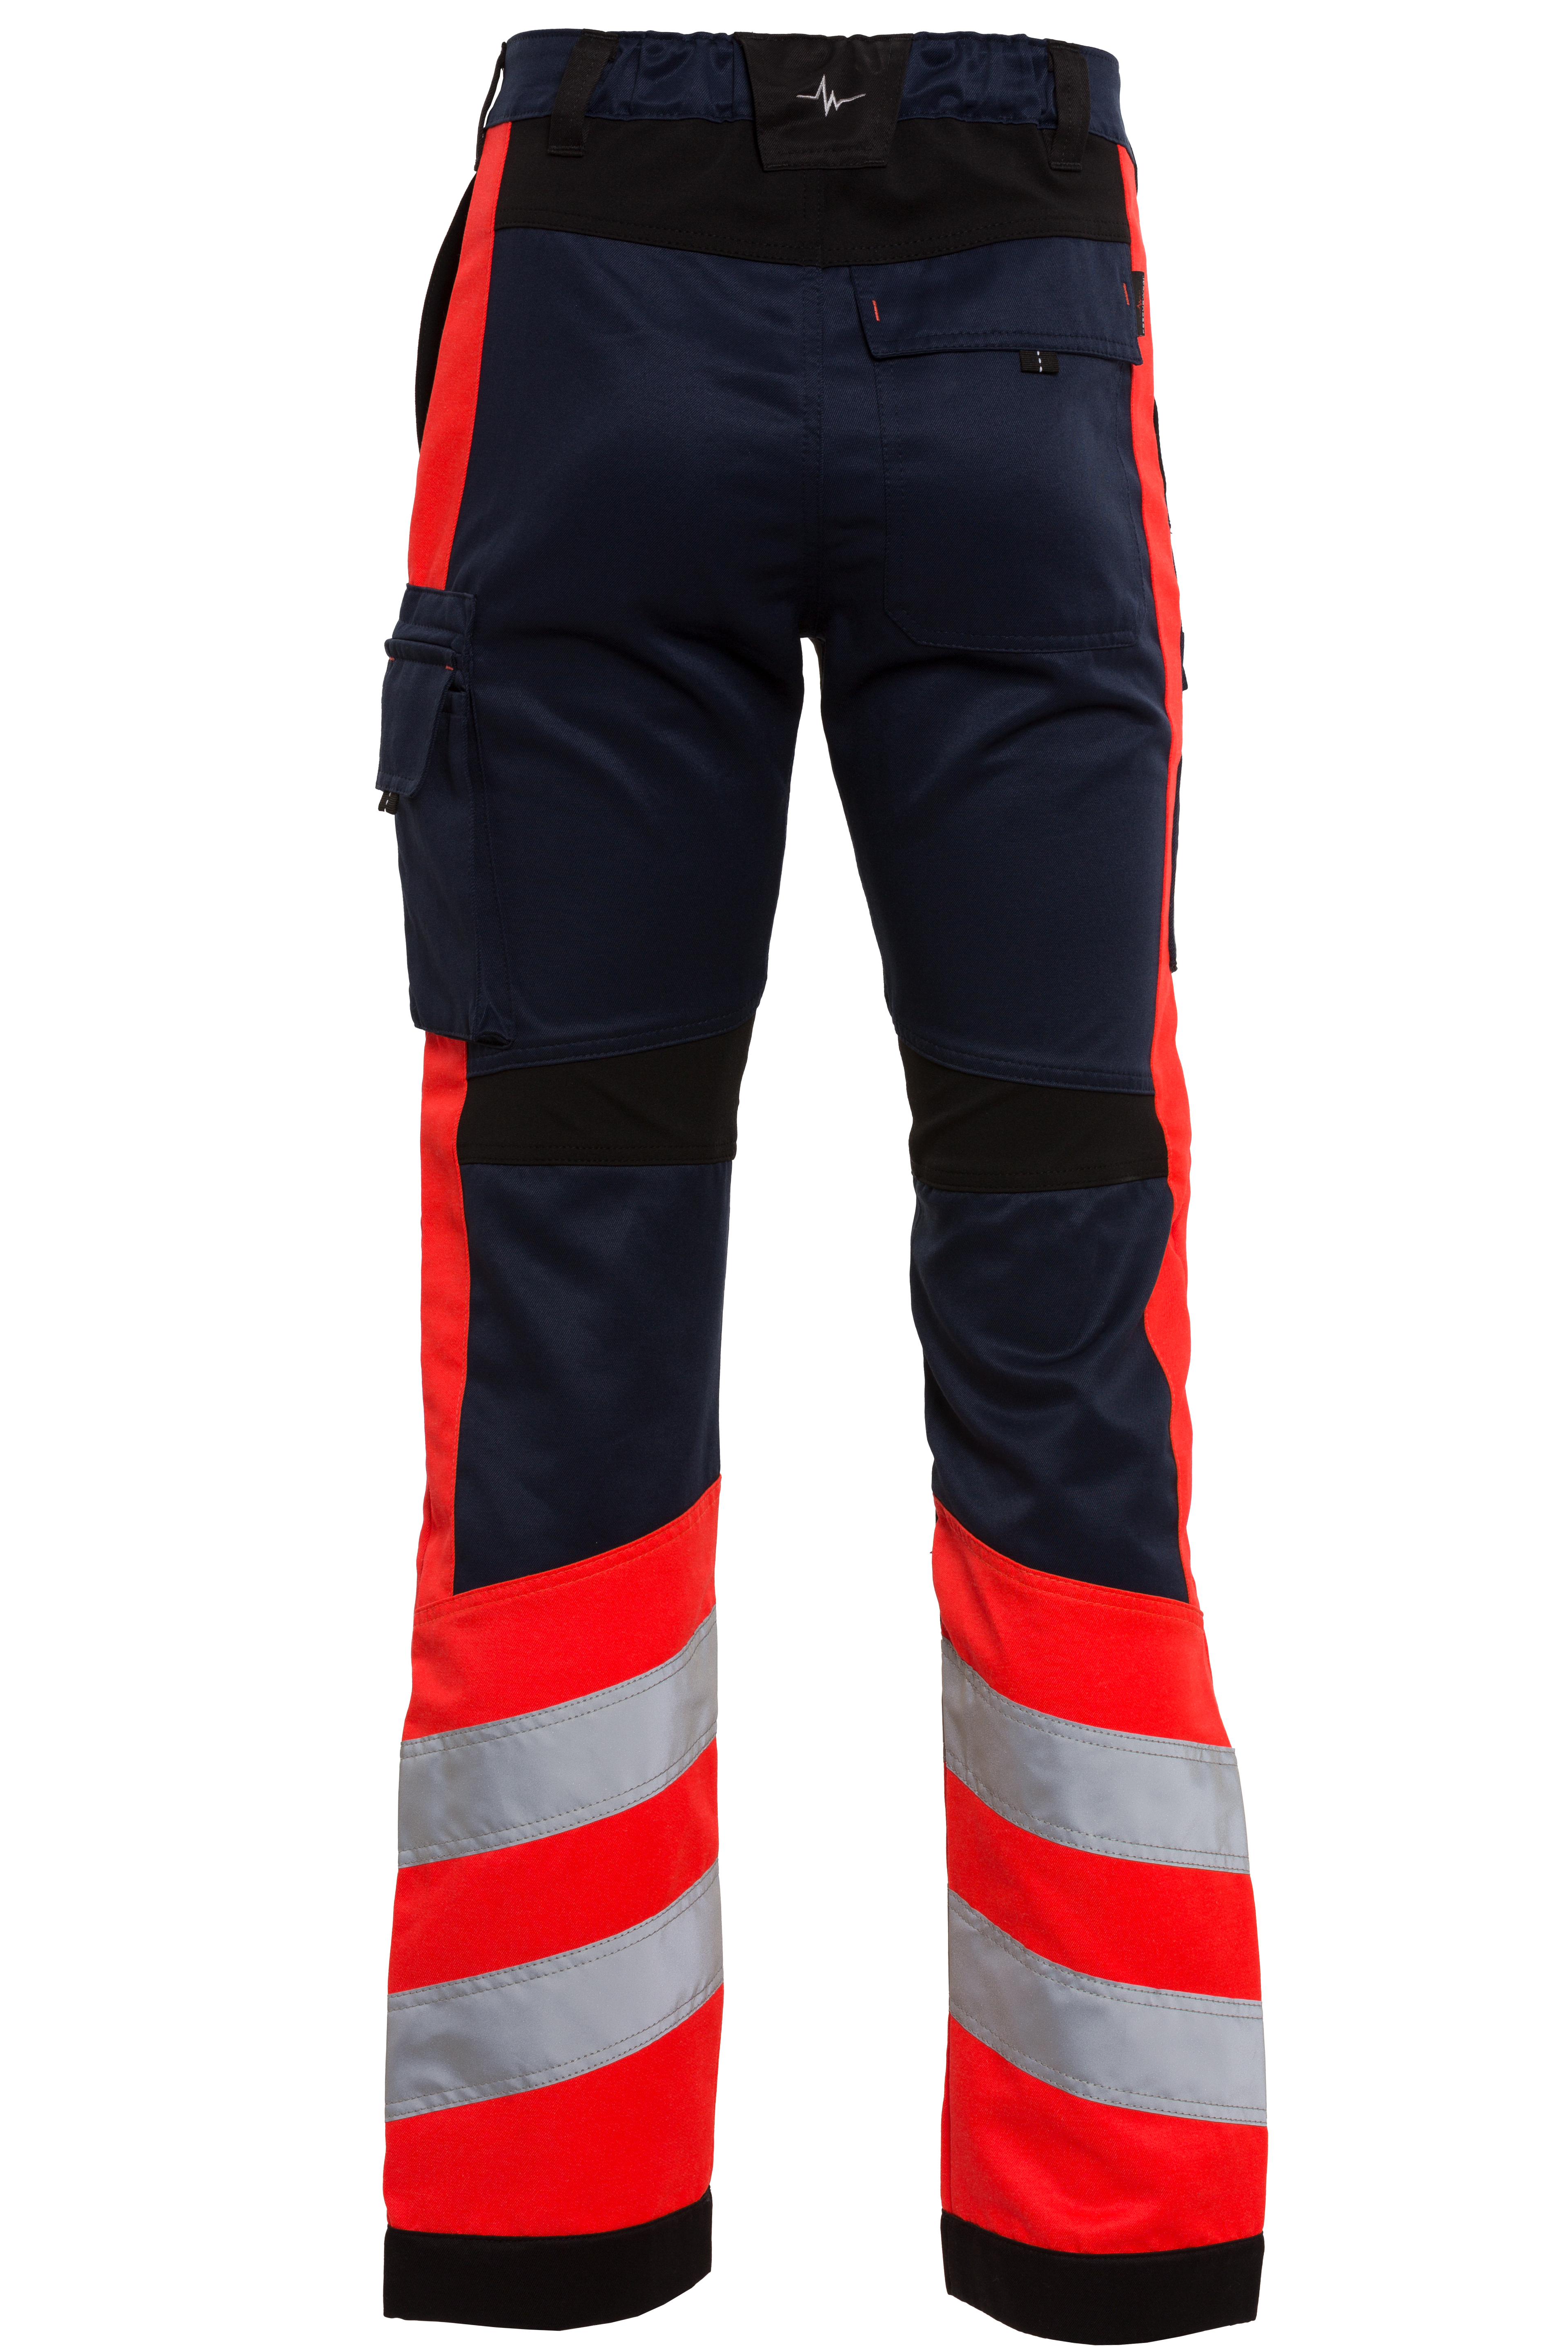 Rescuewear Unisex Hose Stretch HiVis Klasse 1 Marineblau / Schwarz / Neon Rot  - 46